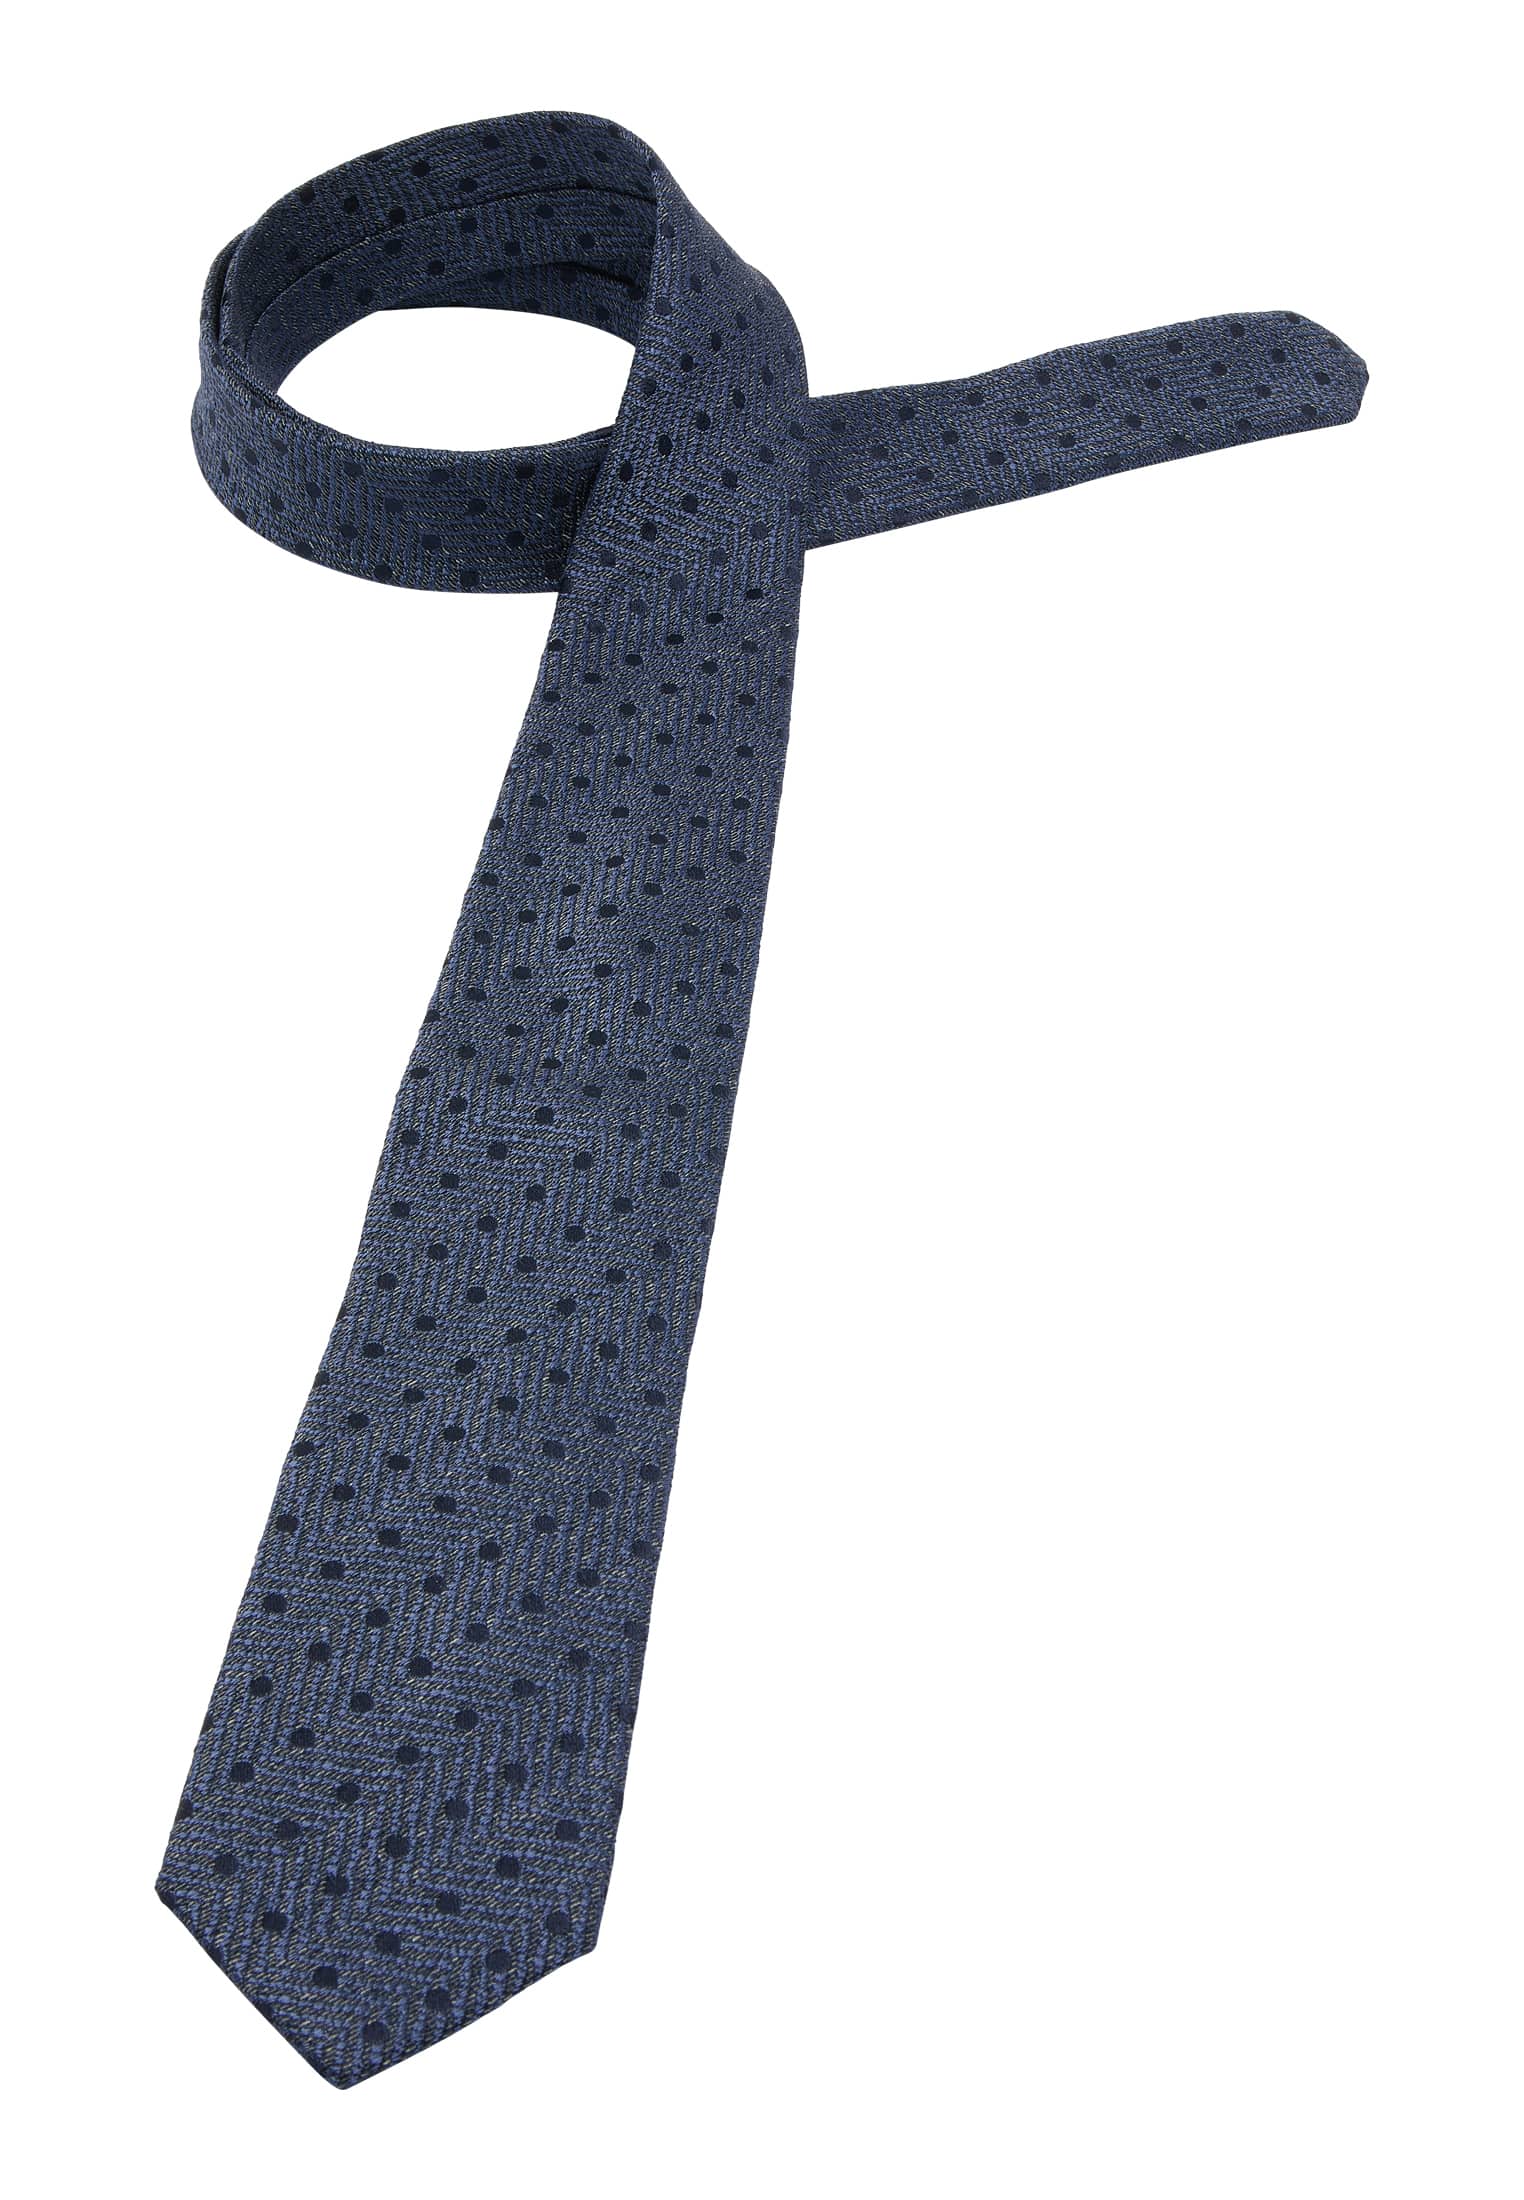 Krawatte in dunkelblau strukturiert | 142 | | 1AC01933-01-81-142 dunkelblau